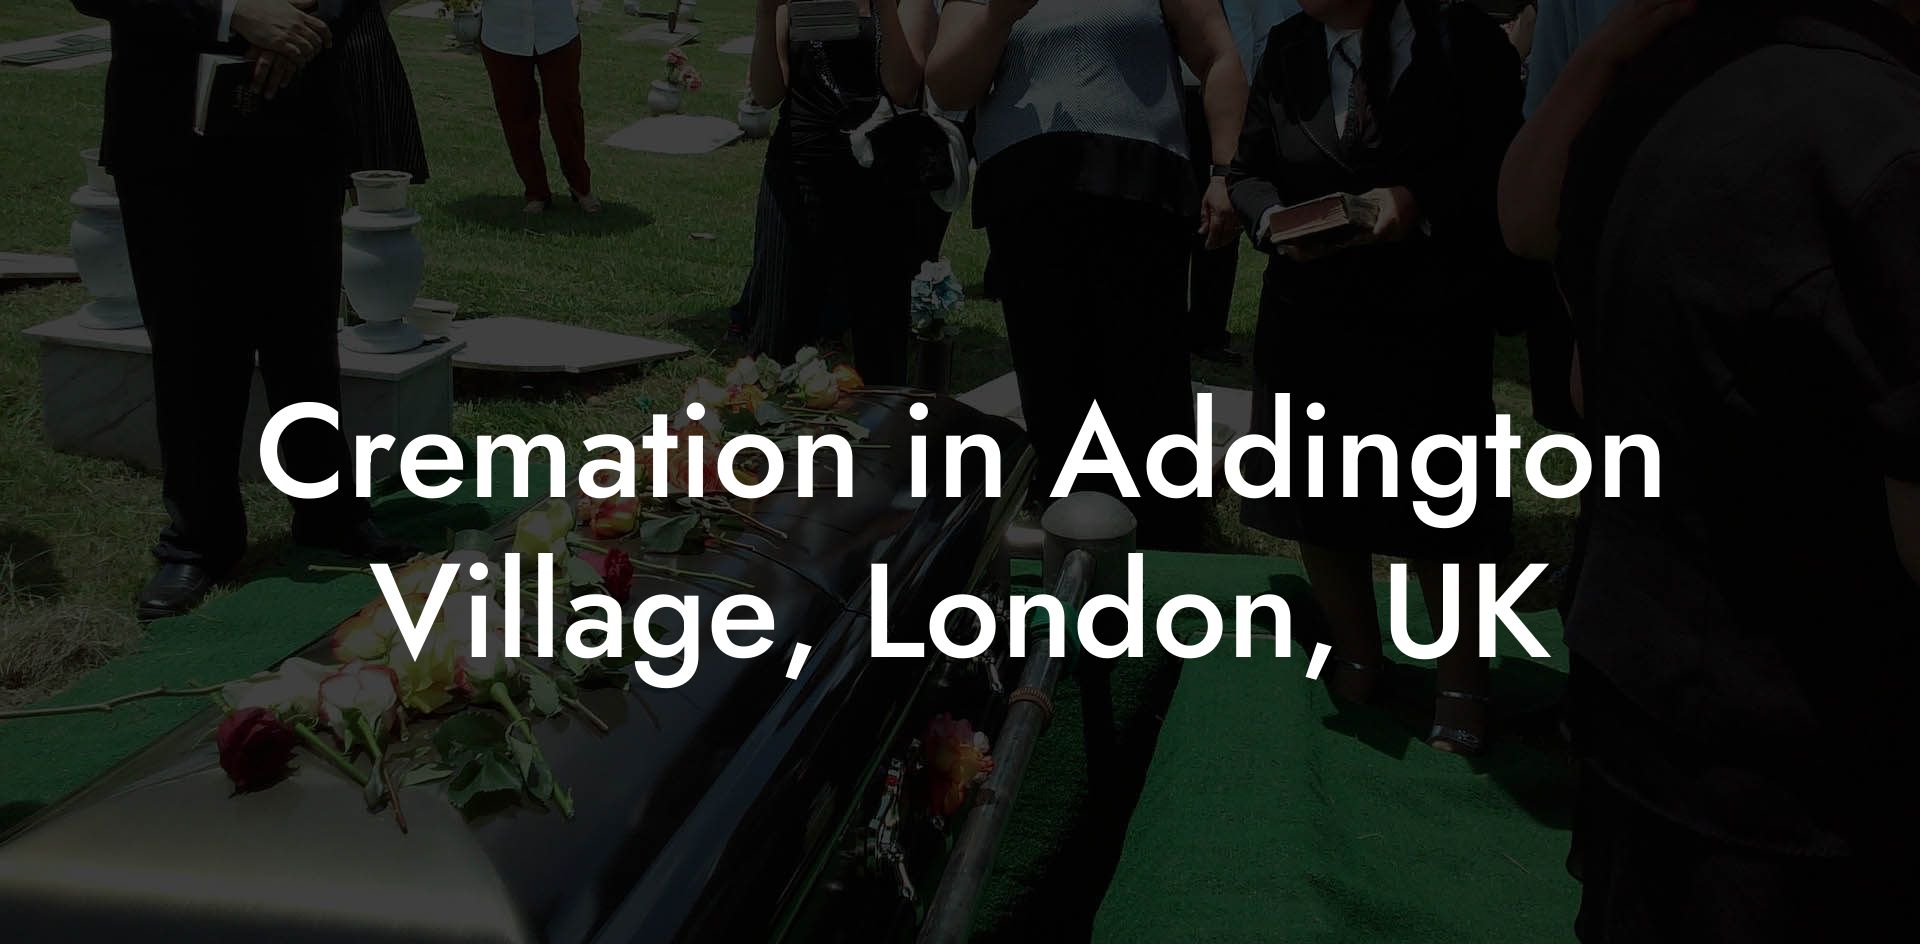 Cremation in Addington Village, London, UK